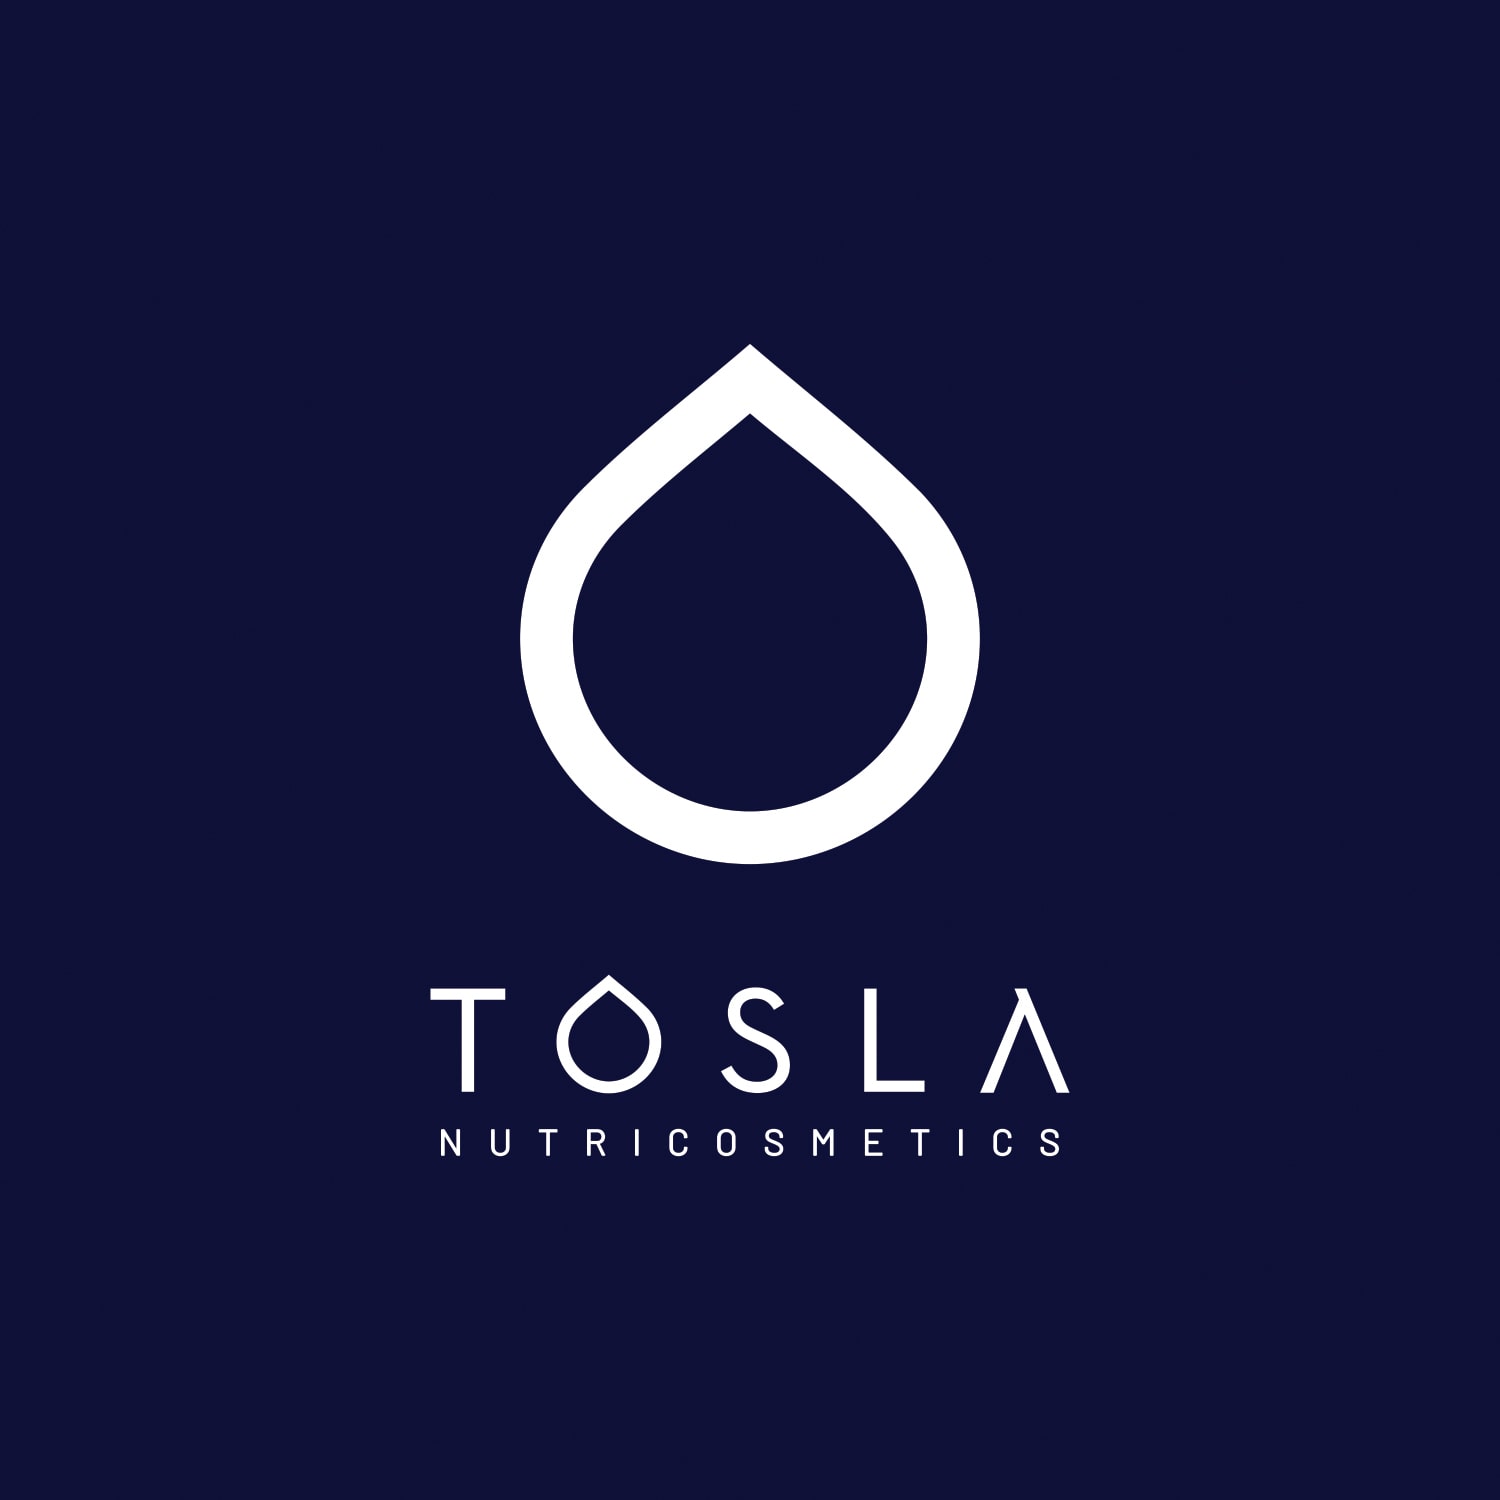 Tosla doo logo design